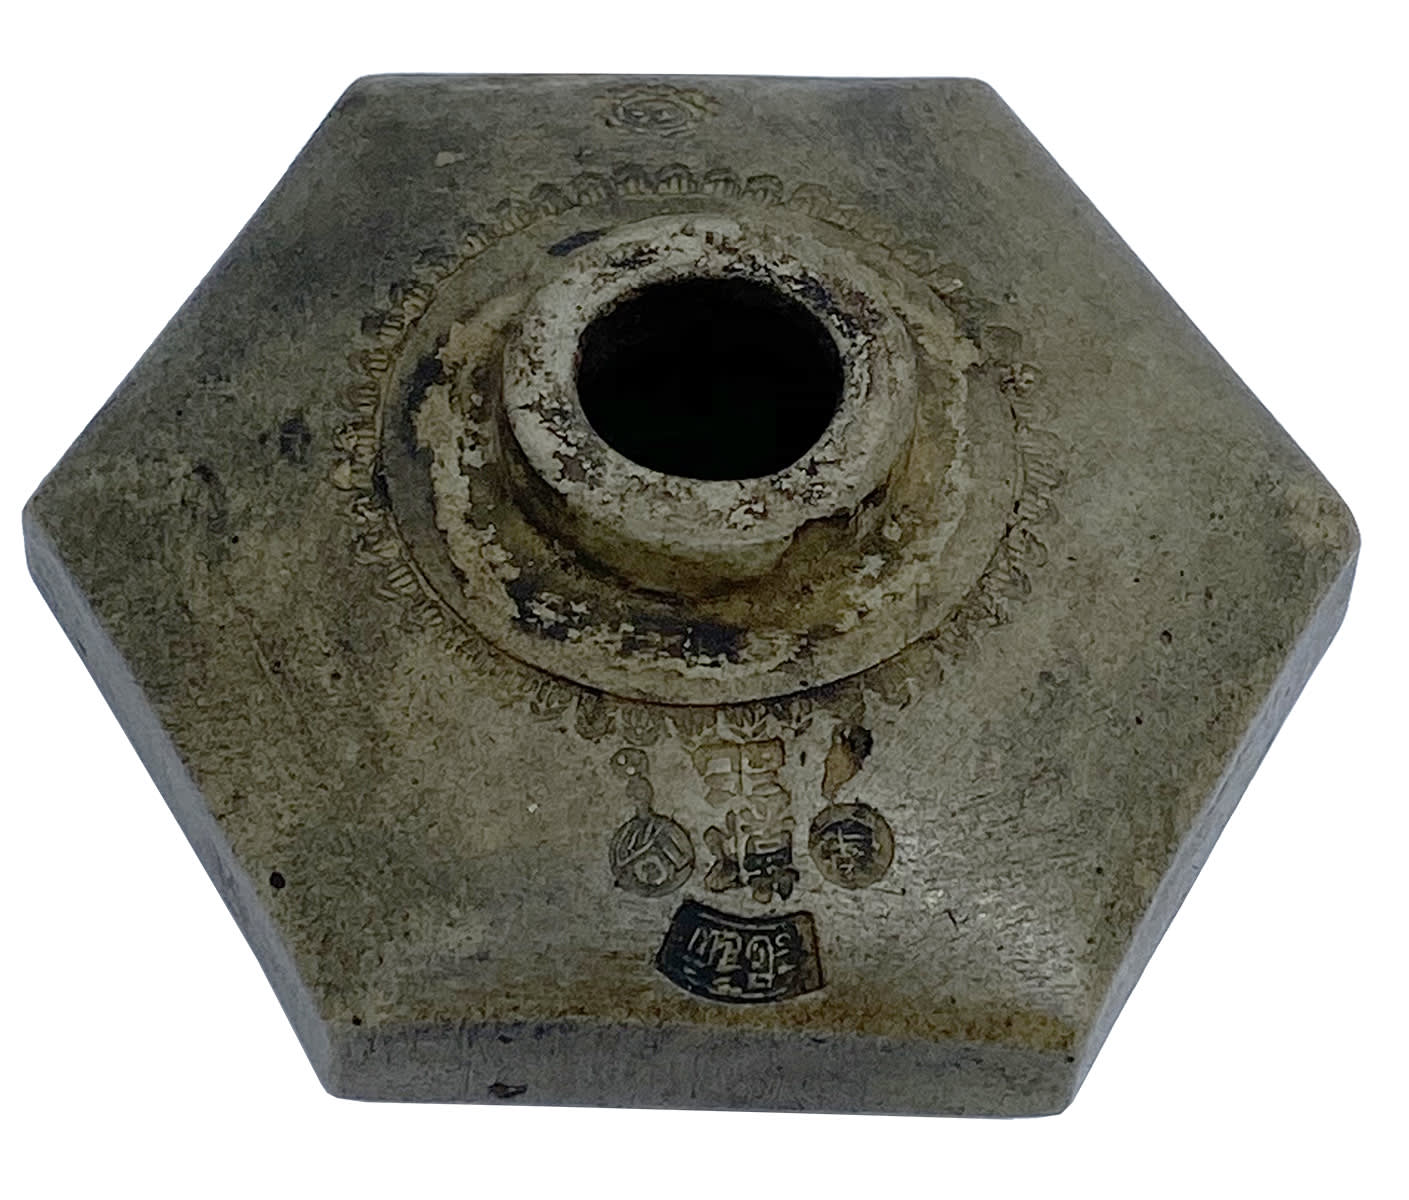 Antique Chinese Opium Pipe Bowl